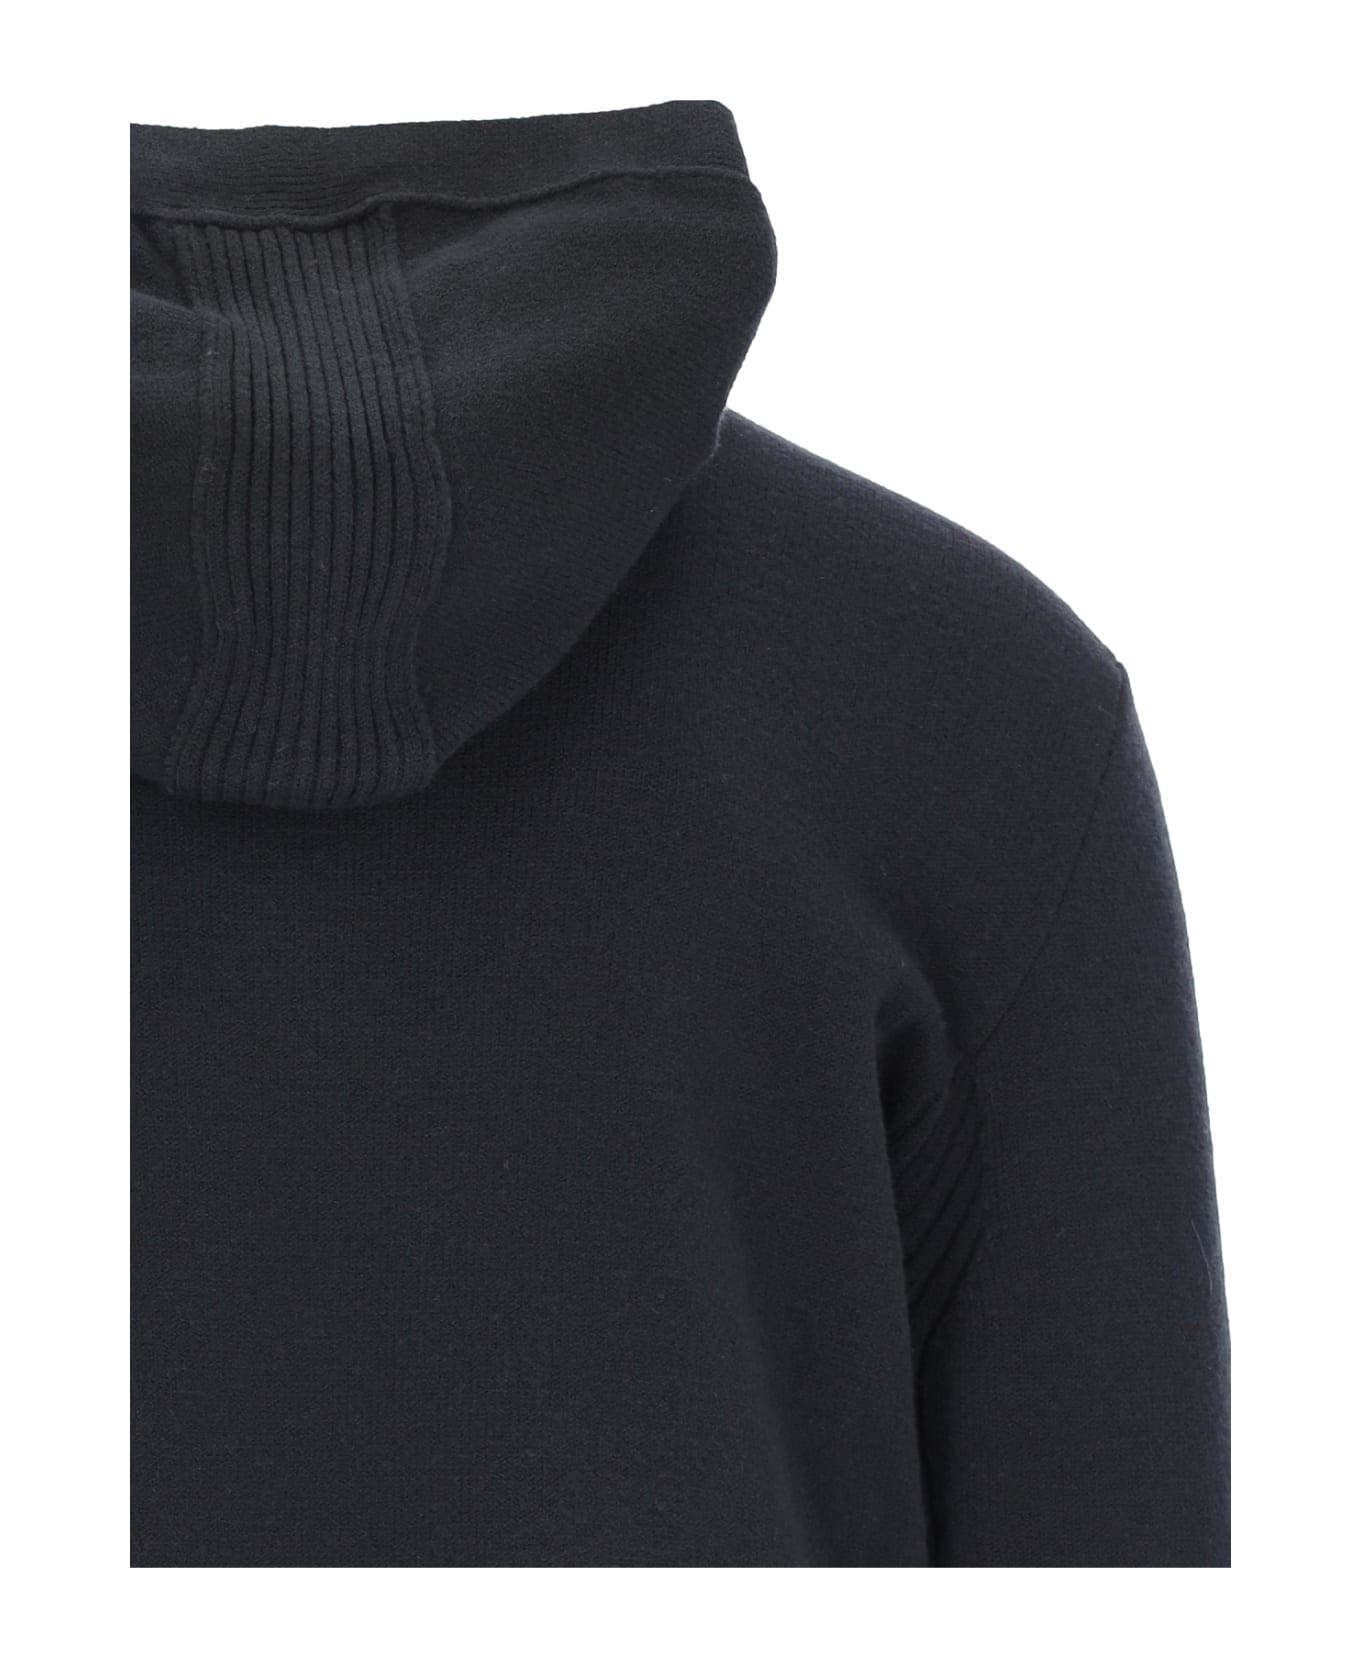 C.P. Company Black Virgin Wool Blend Sweatshirt - Black